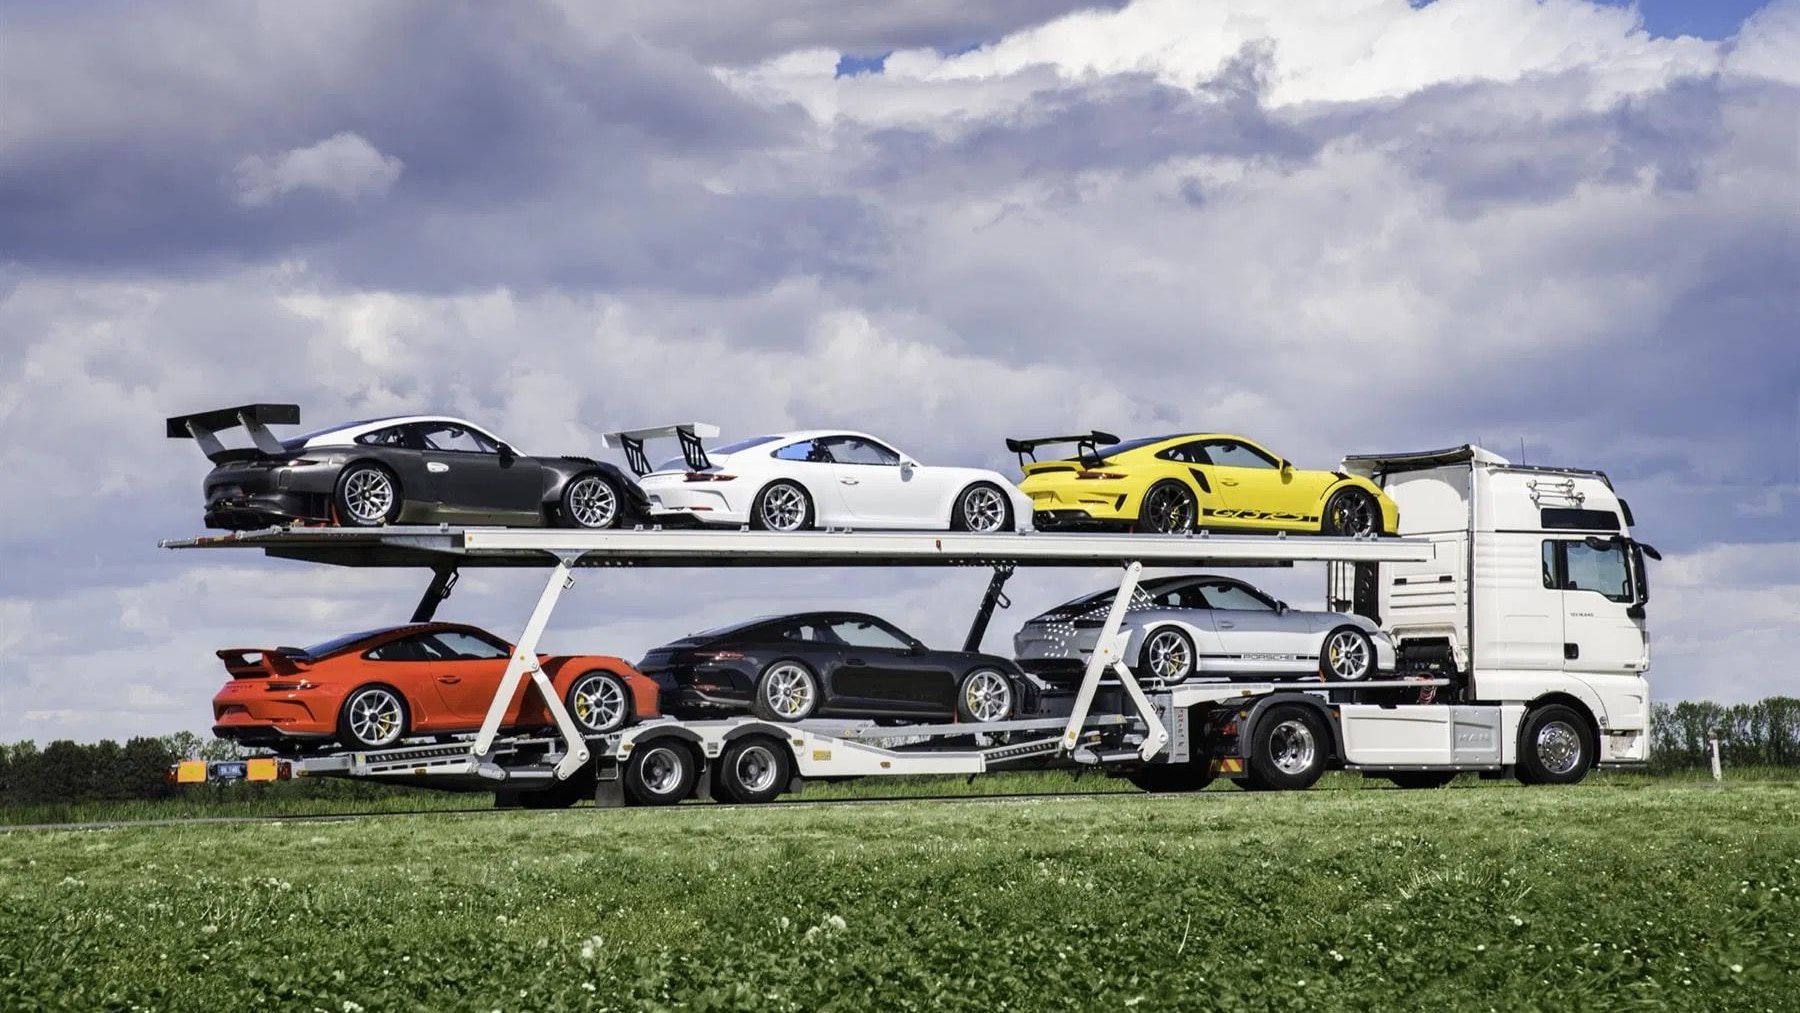 Porsche collection with transporter truck (photo via PistonHeads)